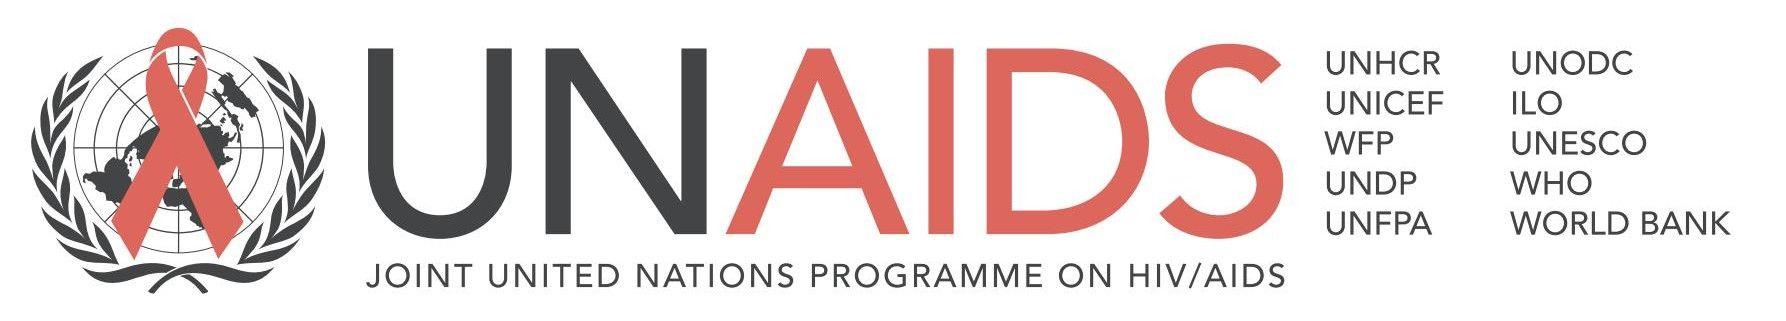 UNAIDS Logo - LogoDix